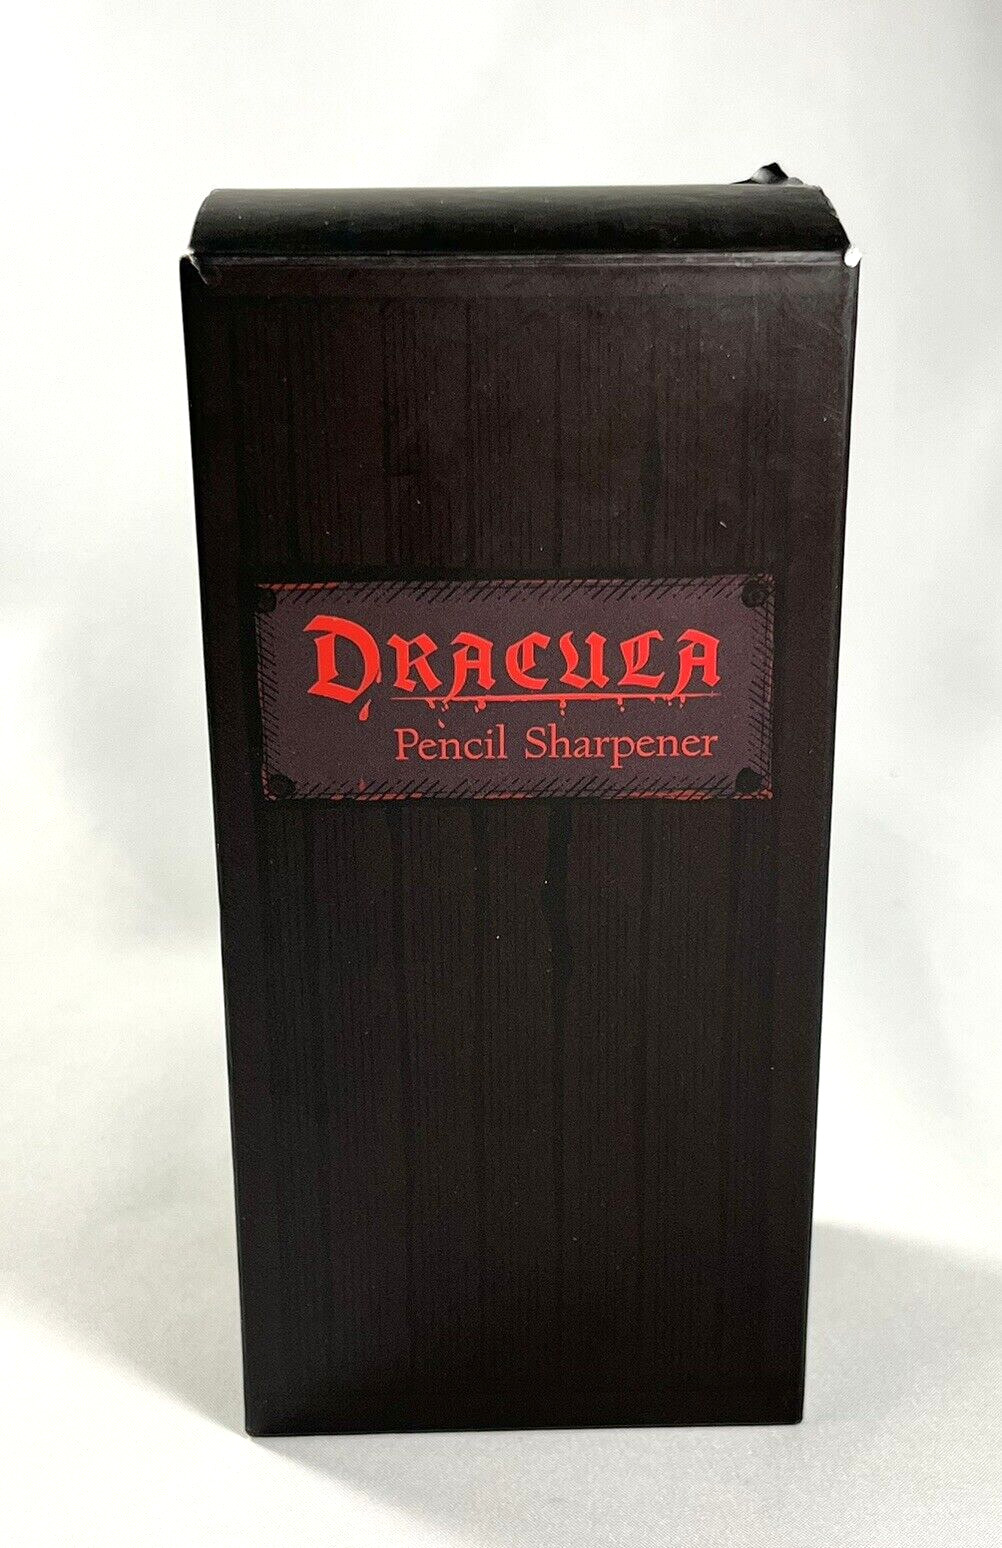 2019 Loot Crate Exclusive Dracula Coffin Pencil Sharpener Open Box